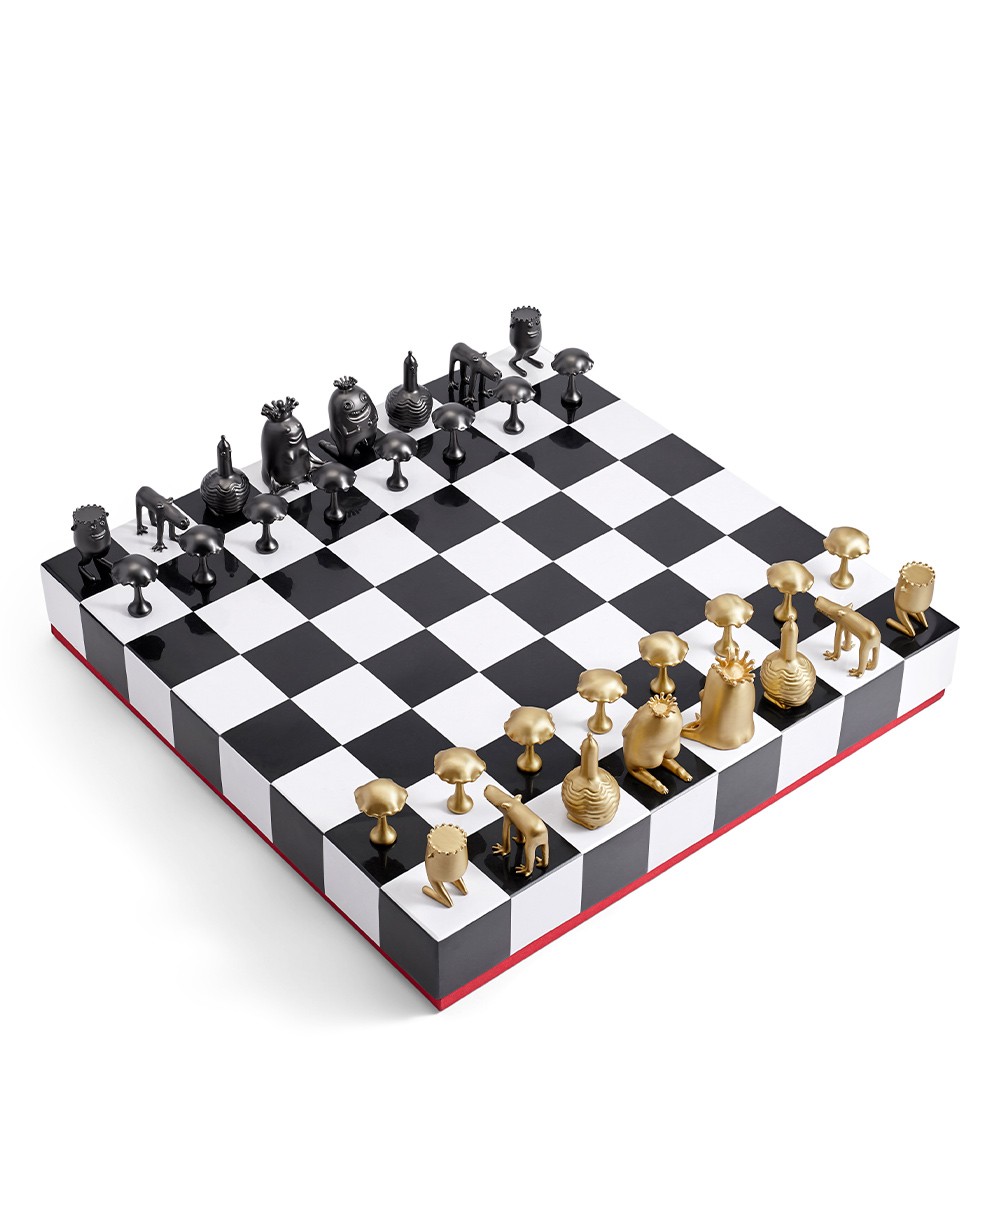 Haas chess set